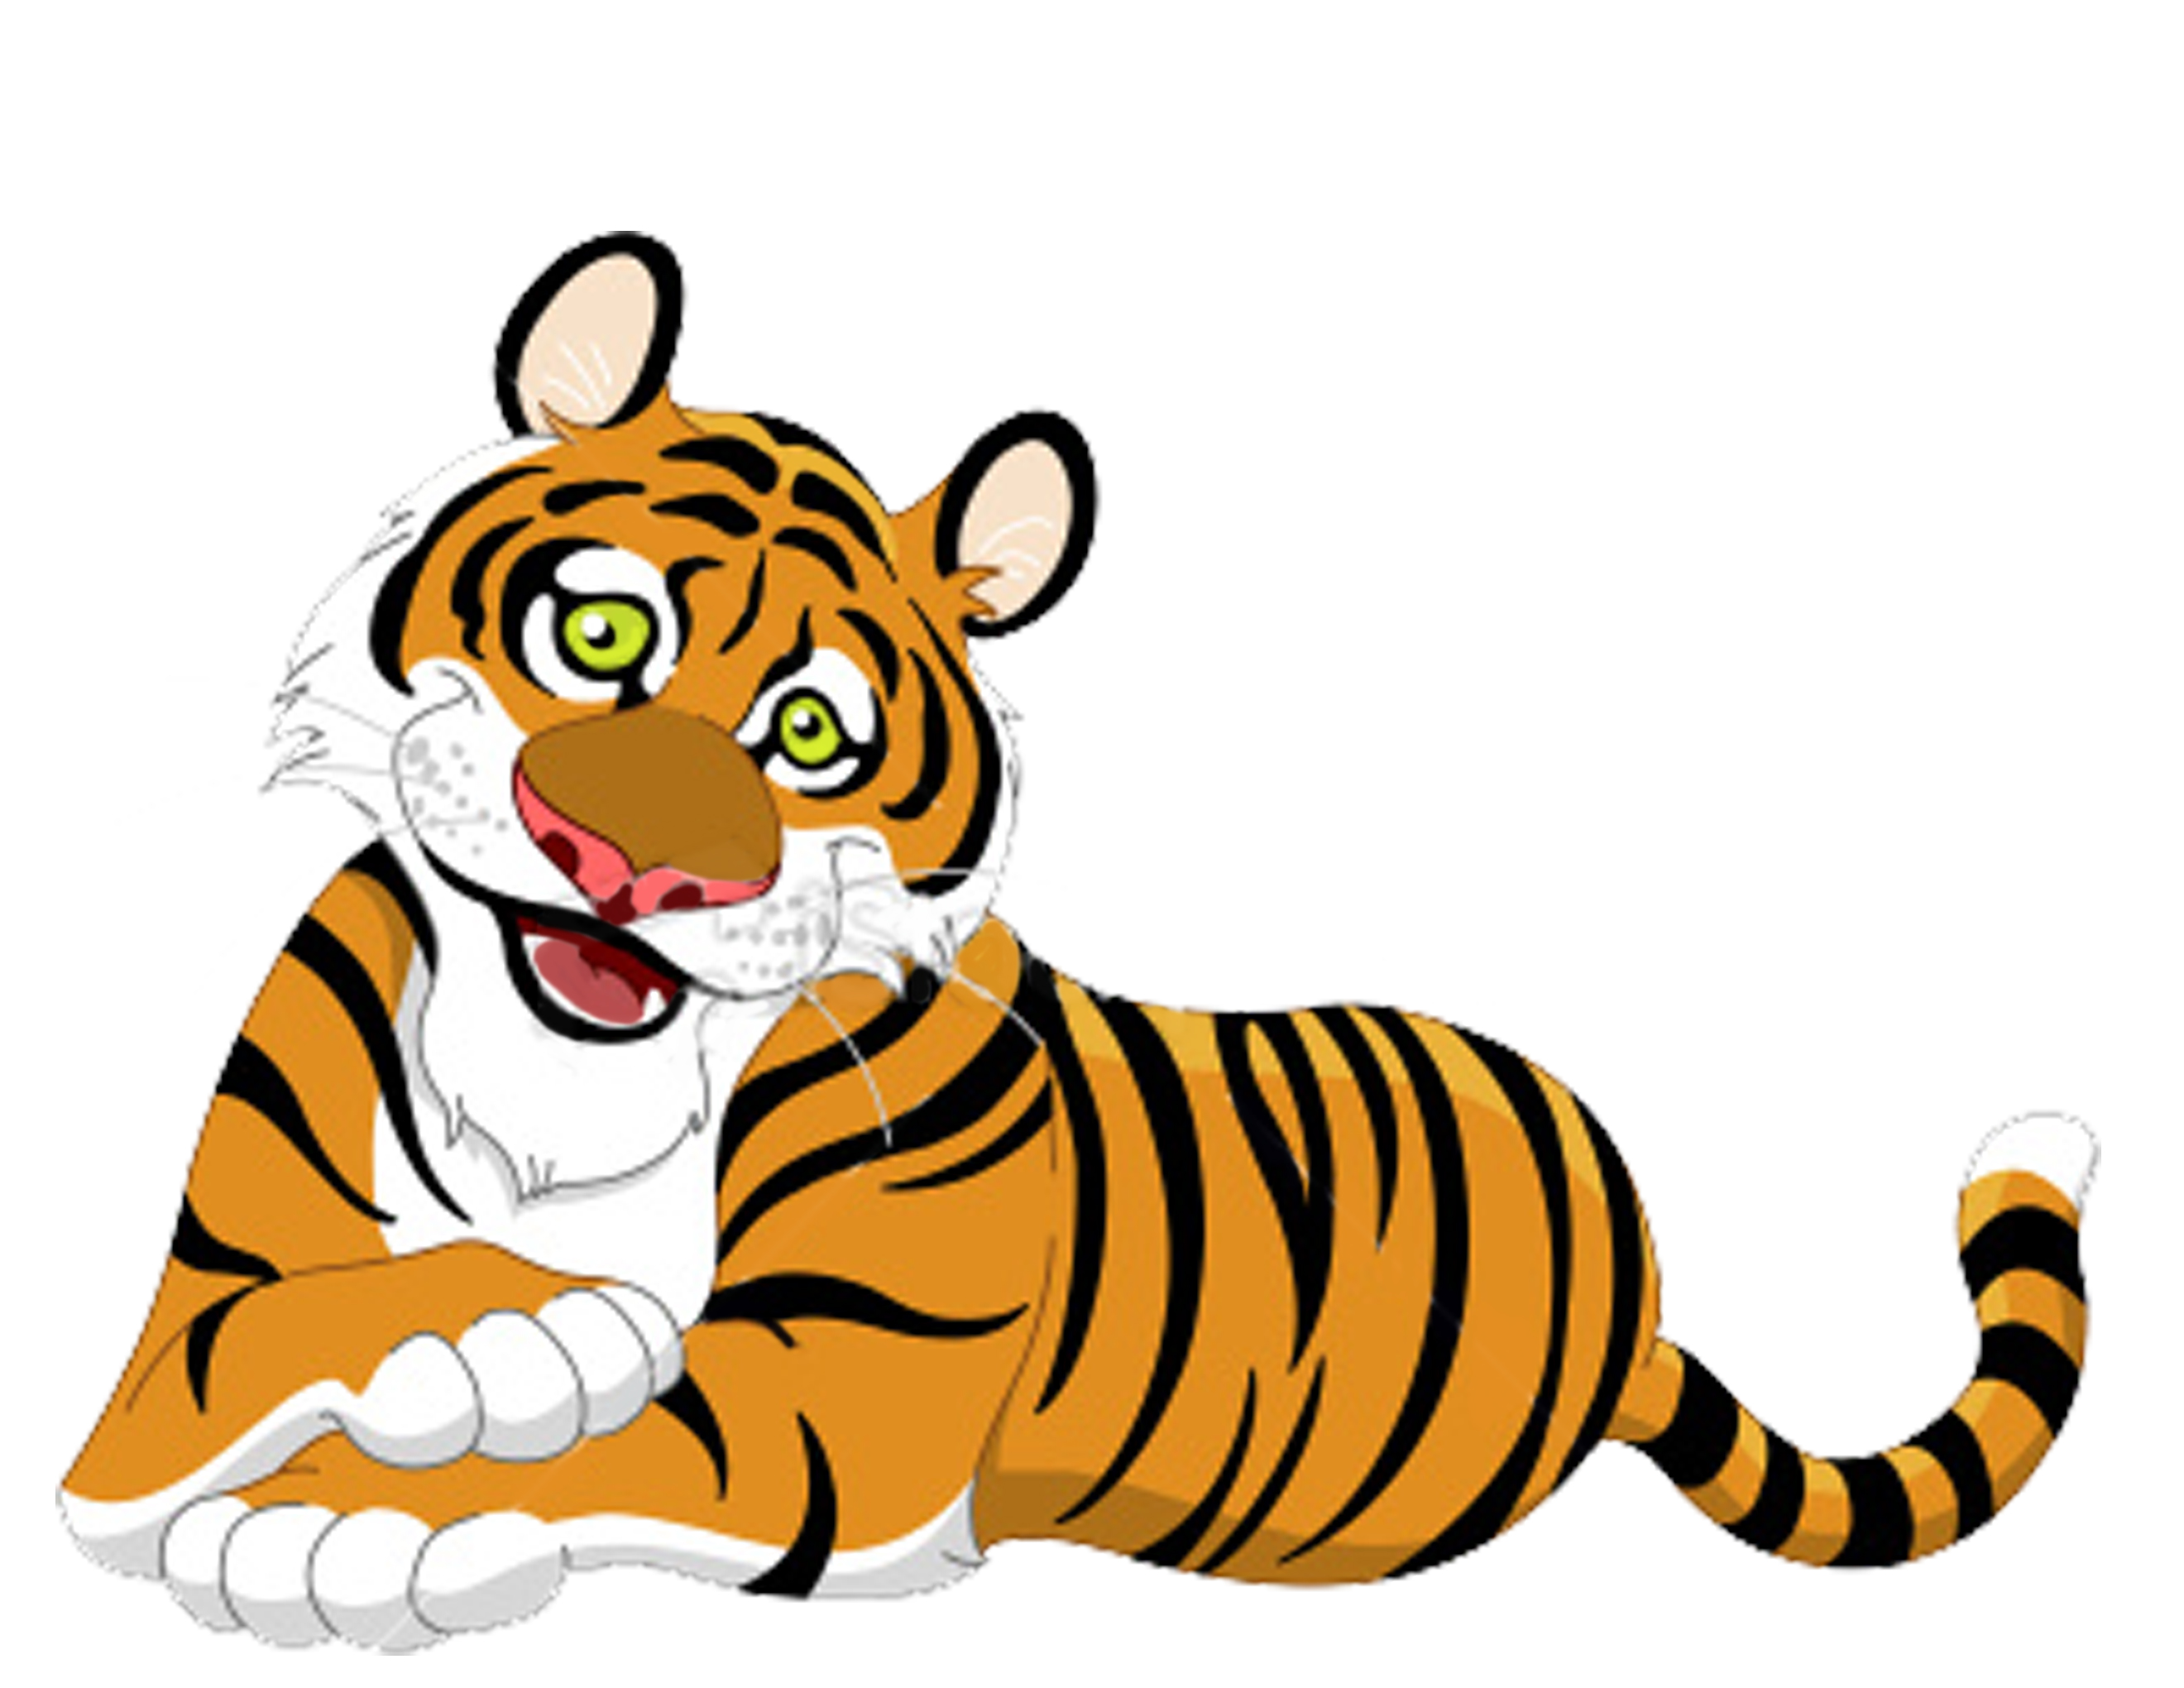 Tiger clip art images free clipart 3